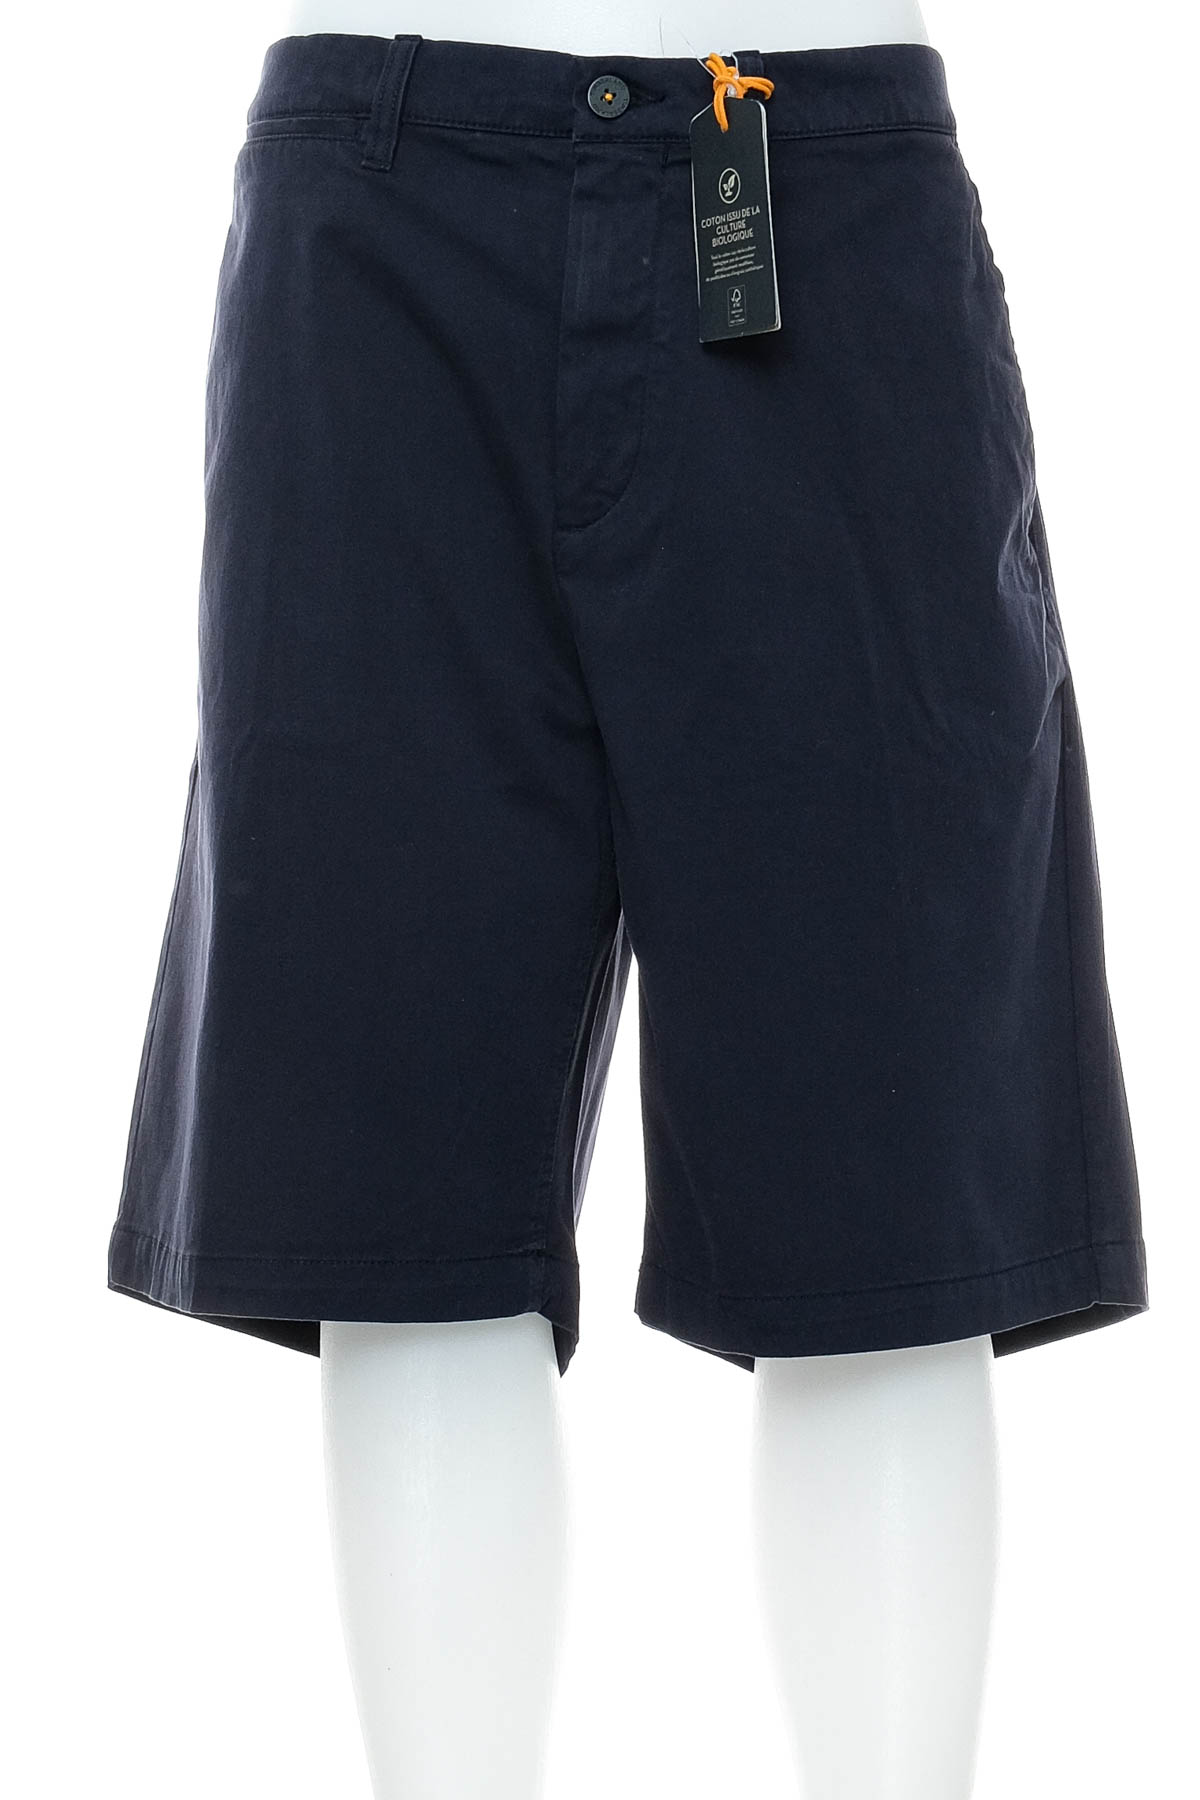 Pantaloni scurți bărbați - Timberland - 0